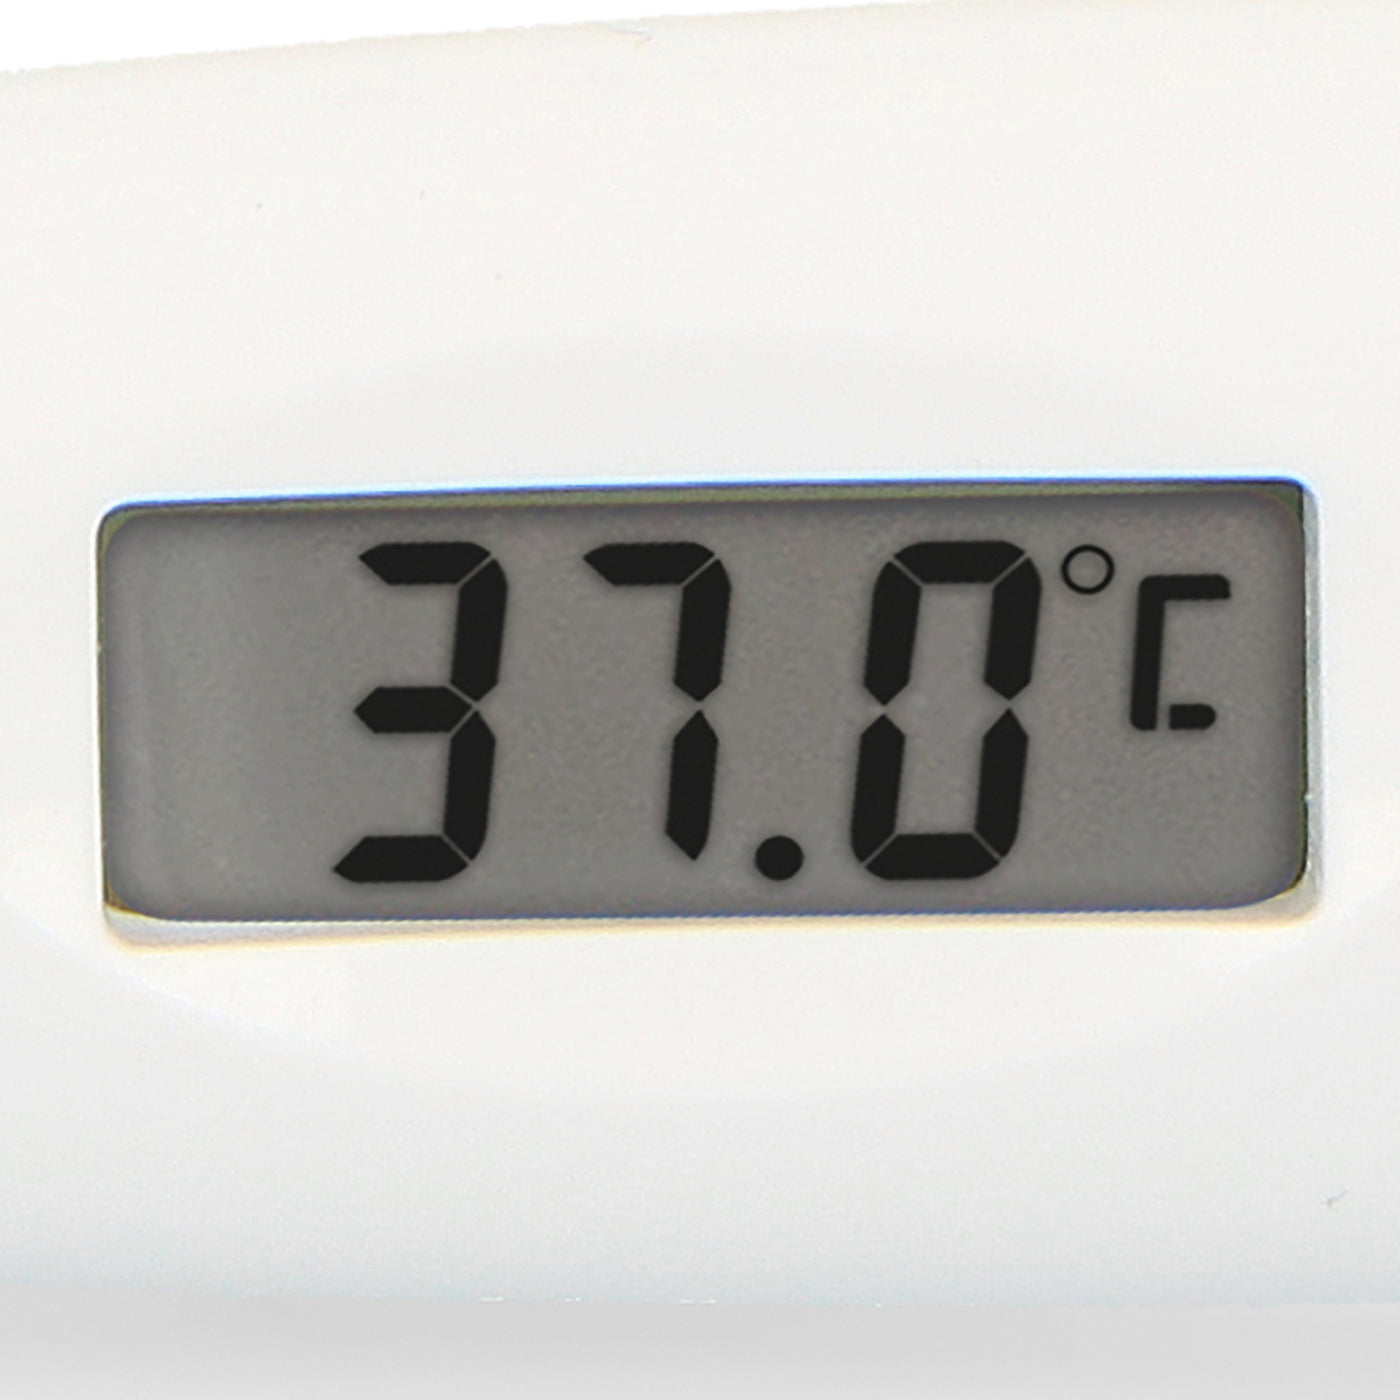 Alecto BC-19GN - Digital thermometer, green